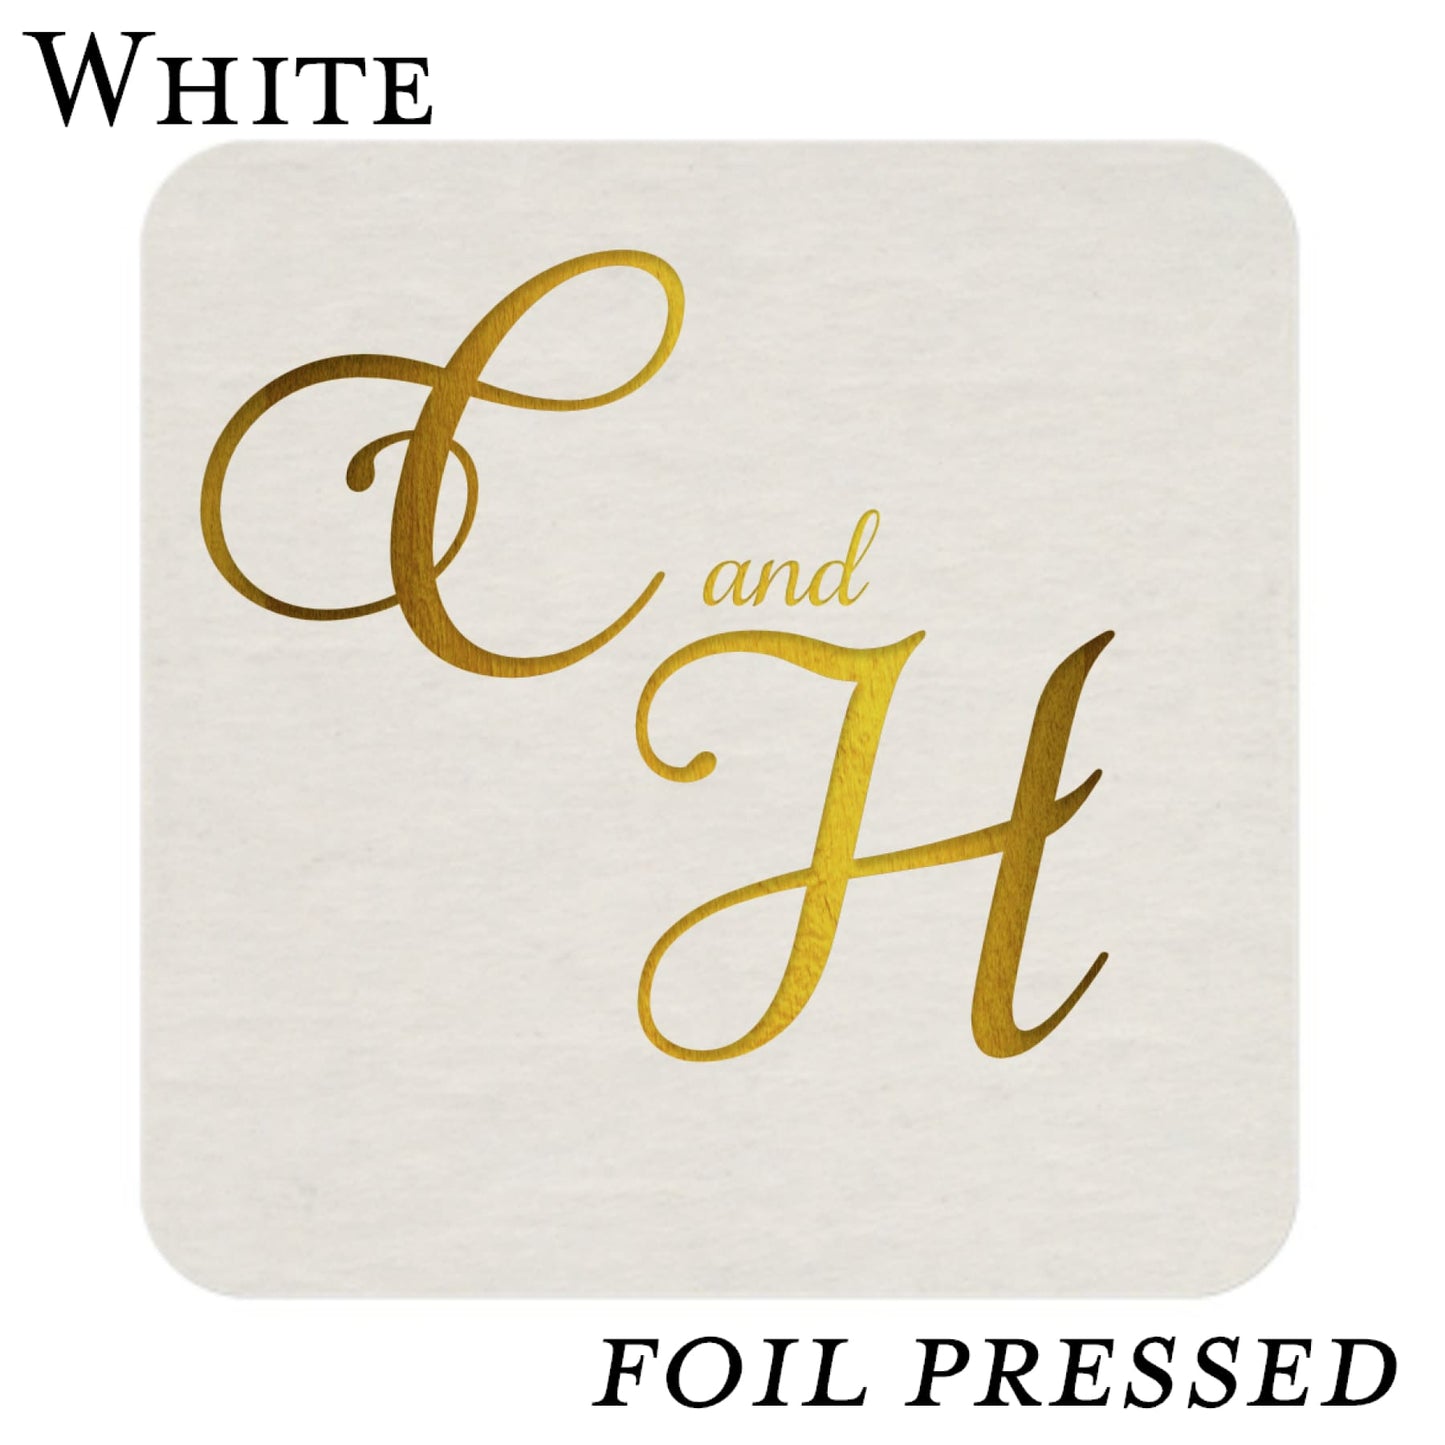 White Wedding Reception Coasters-Foil Pressed - All That Glitters Invitations